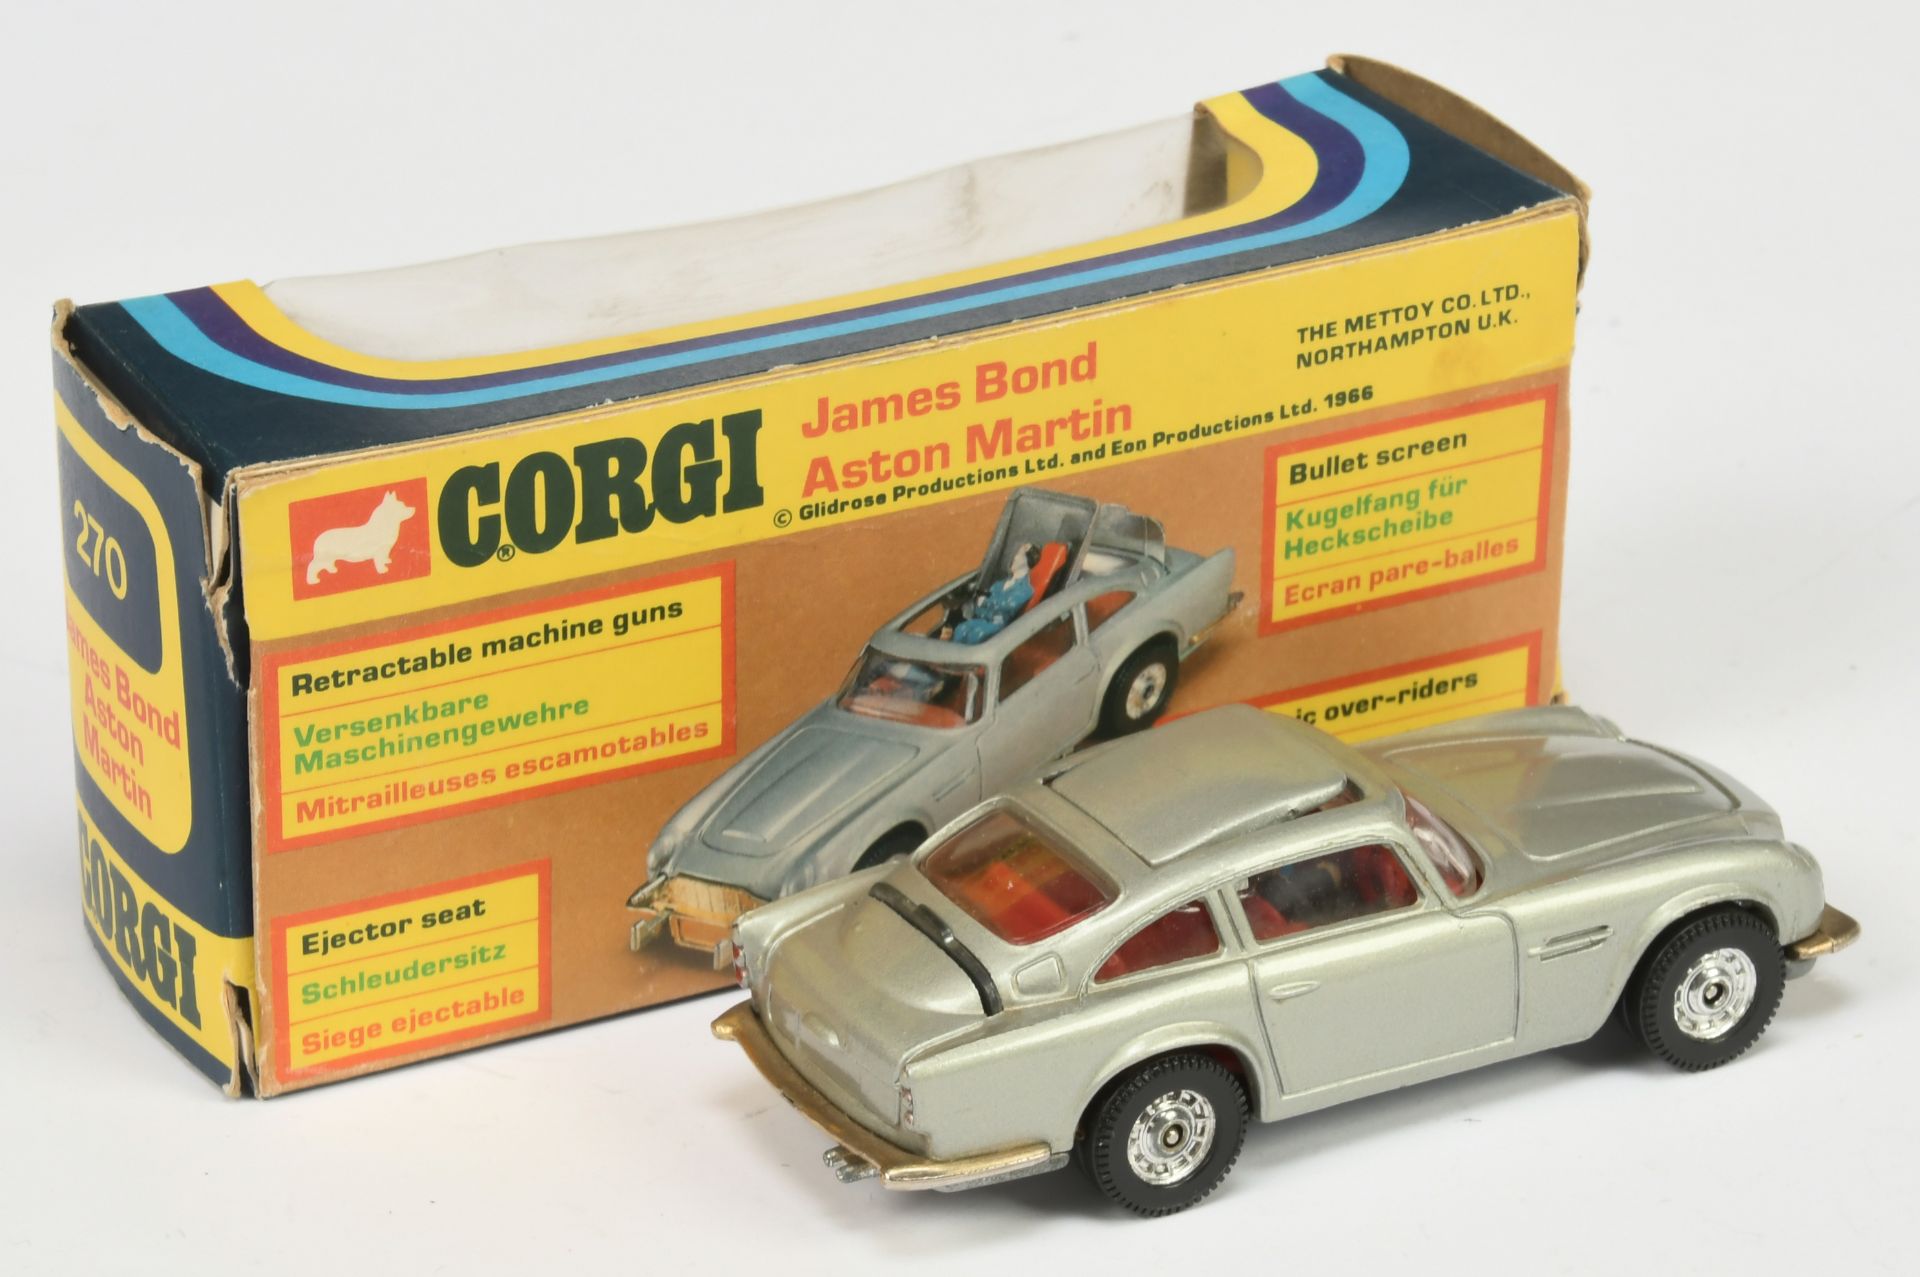 Corgi Toys 270 "James Bond" Aston Martin DB5 - 2nd issue - Silver body, red interior with "James ... - Bild 2 aus 2